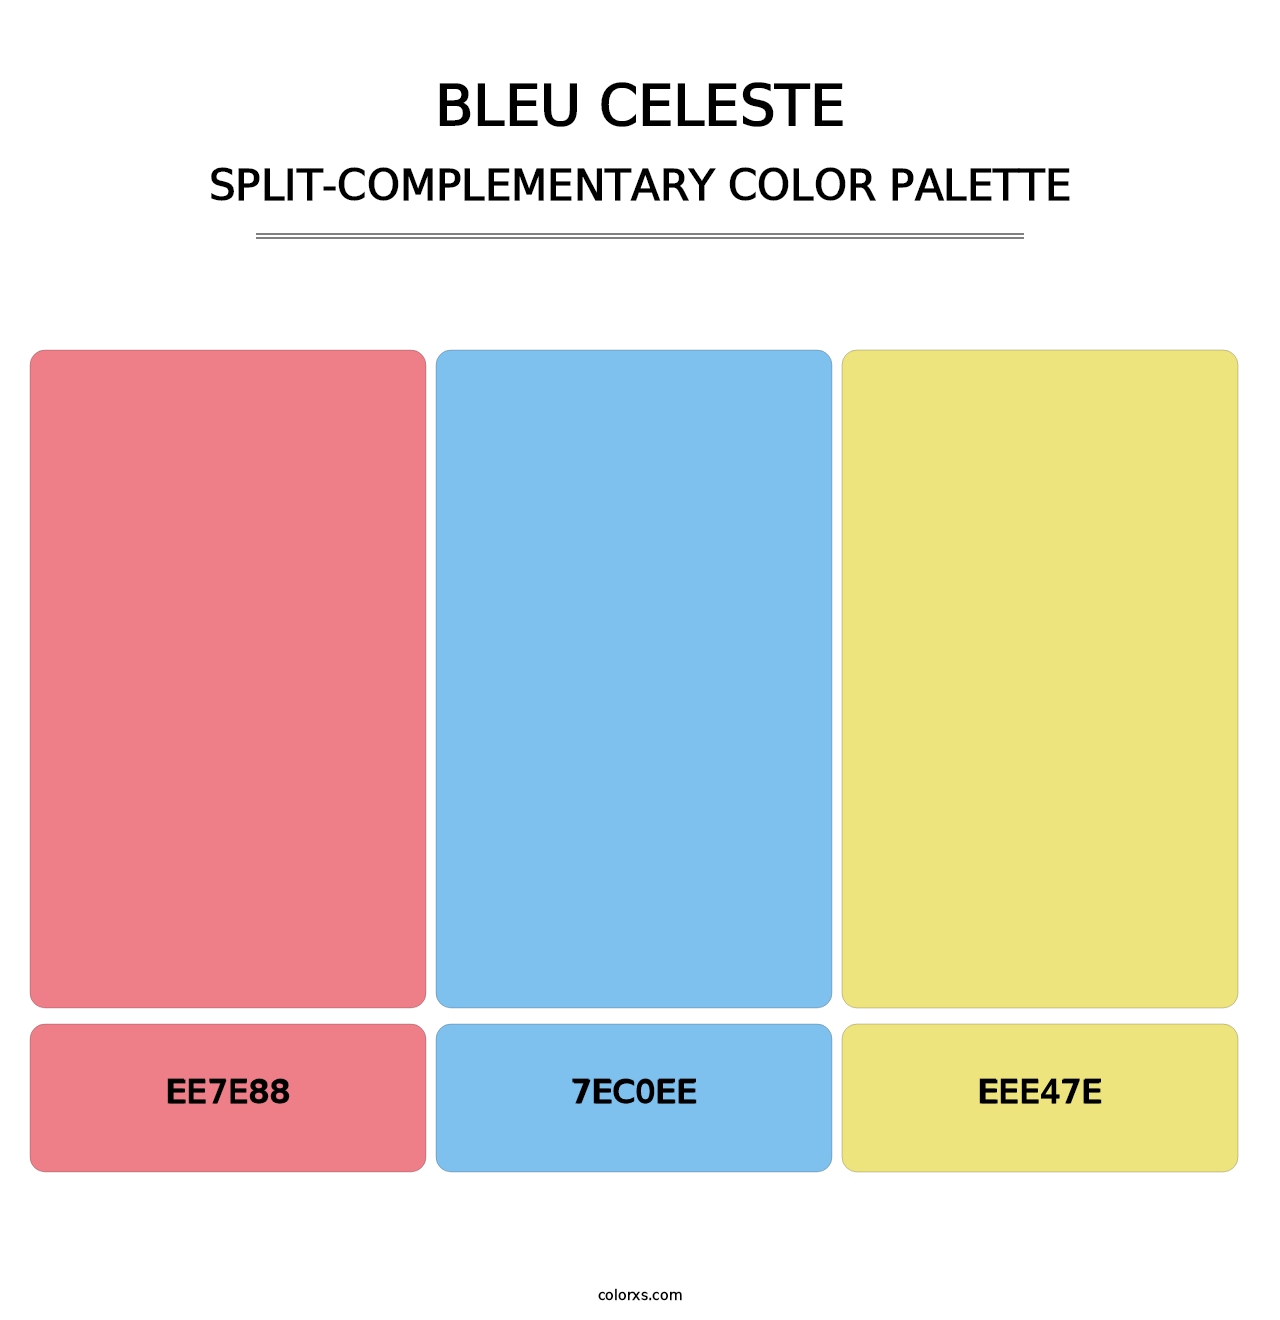 Bleu Celeste - Split-Complementary Color Palette